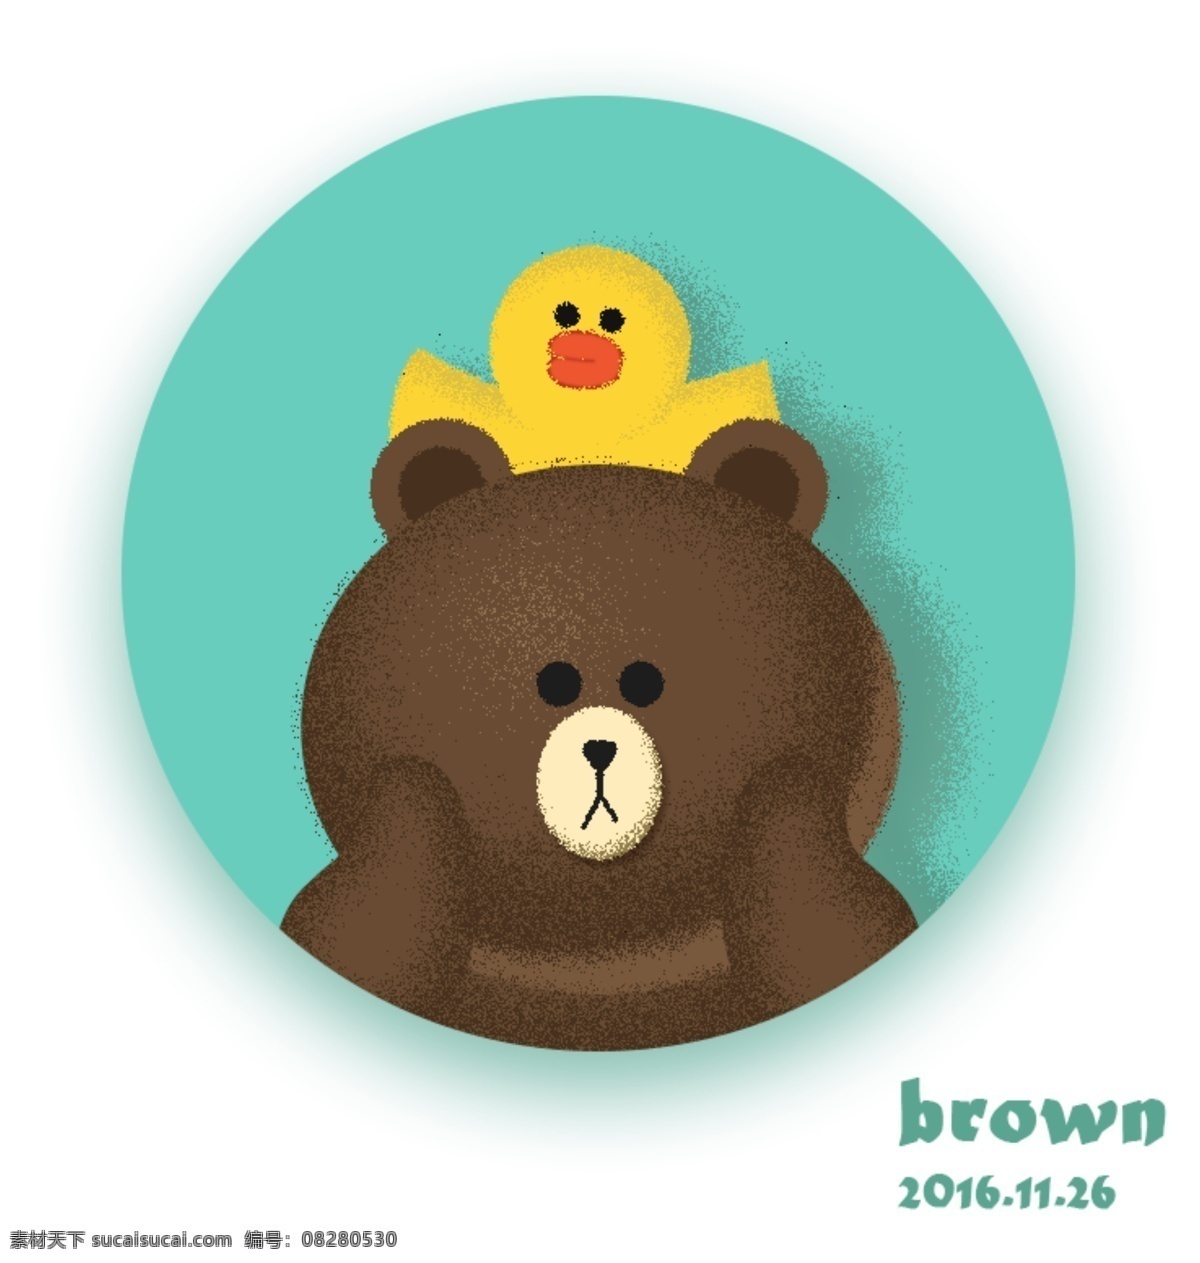 ps 制作 毛绒 brown 布朗 熊 布朗熊 ps样式 卡通 可爱风 创意设计